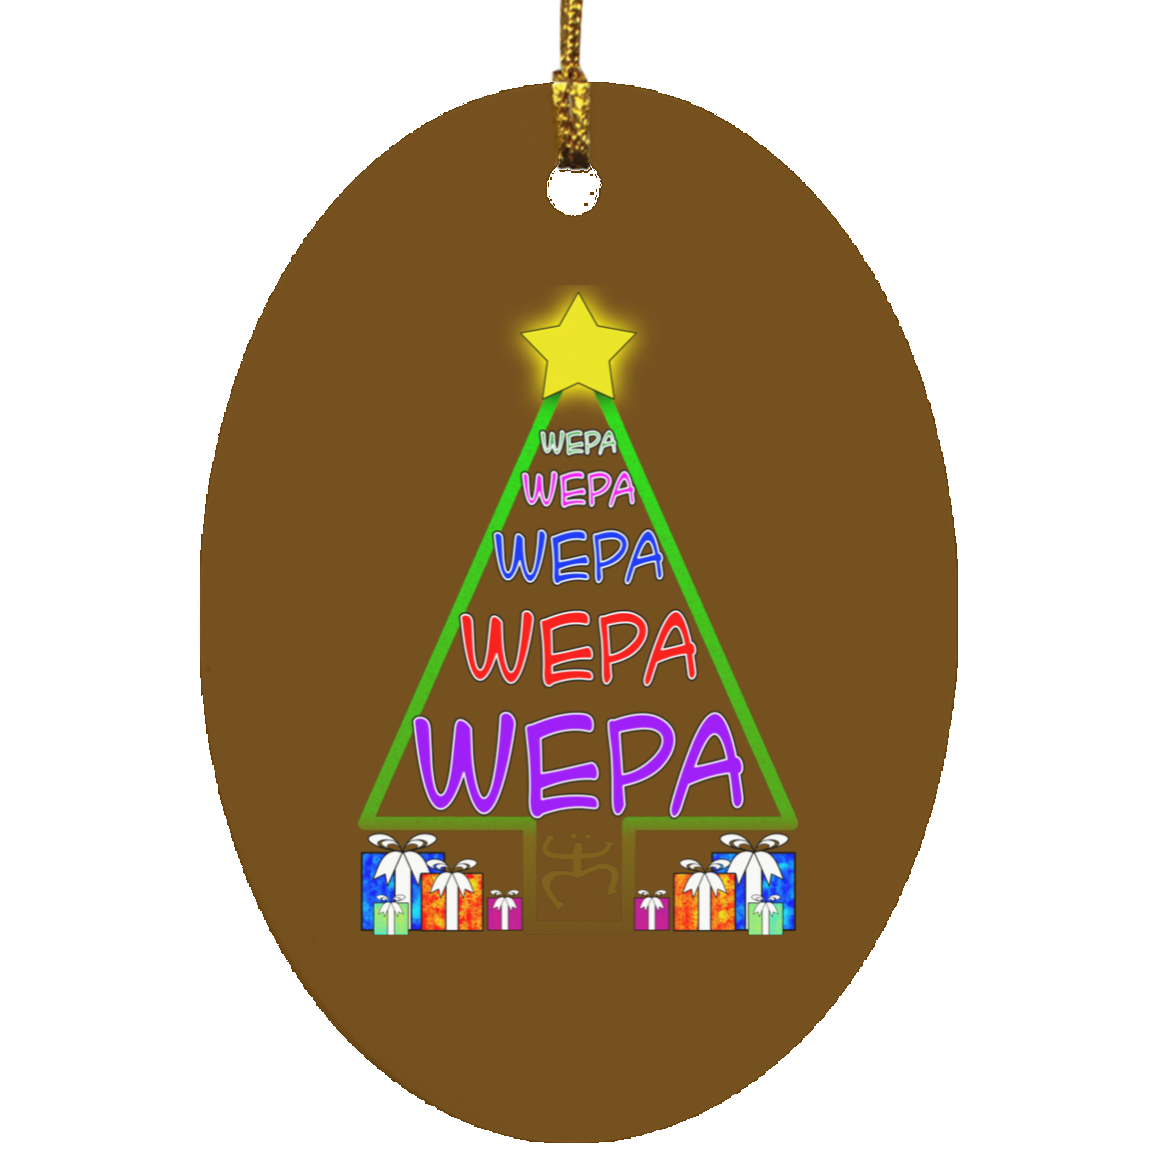 WEPA Tree Oval Ornament - Puerto Rican Pride